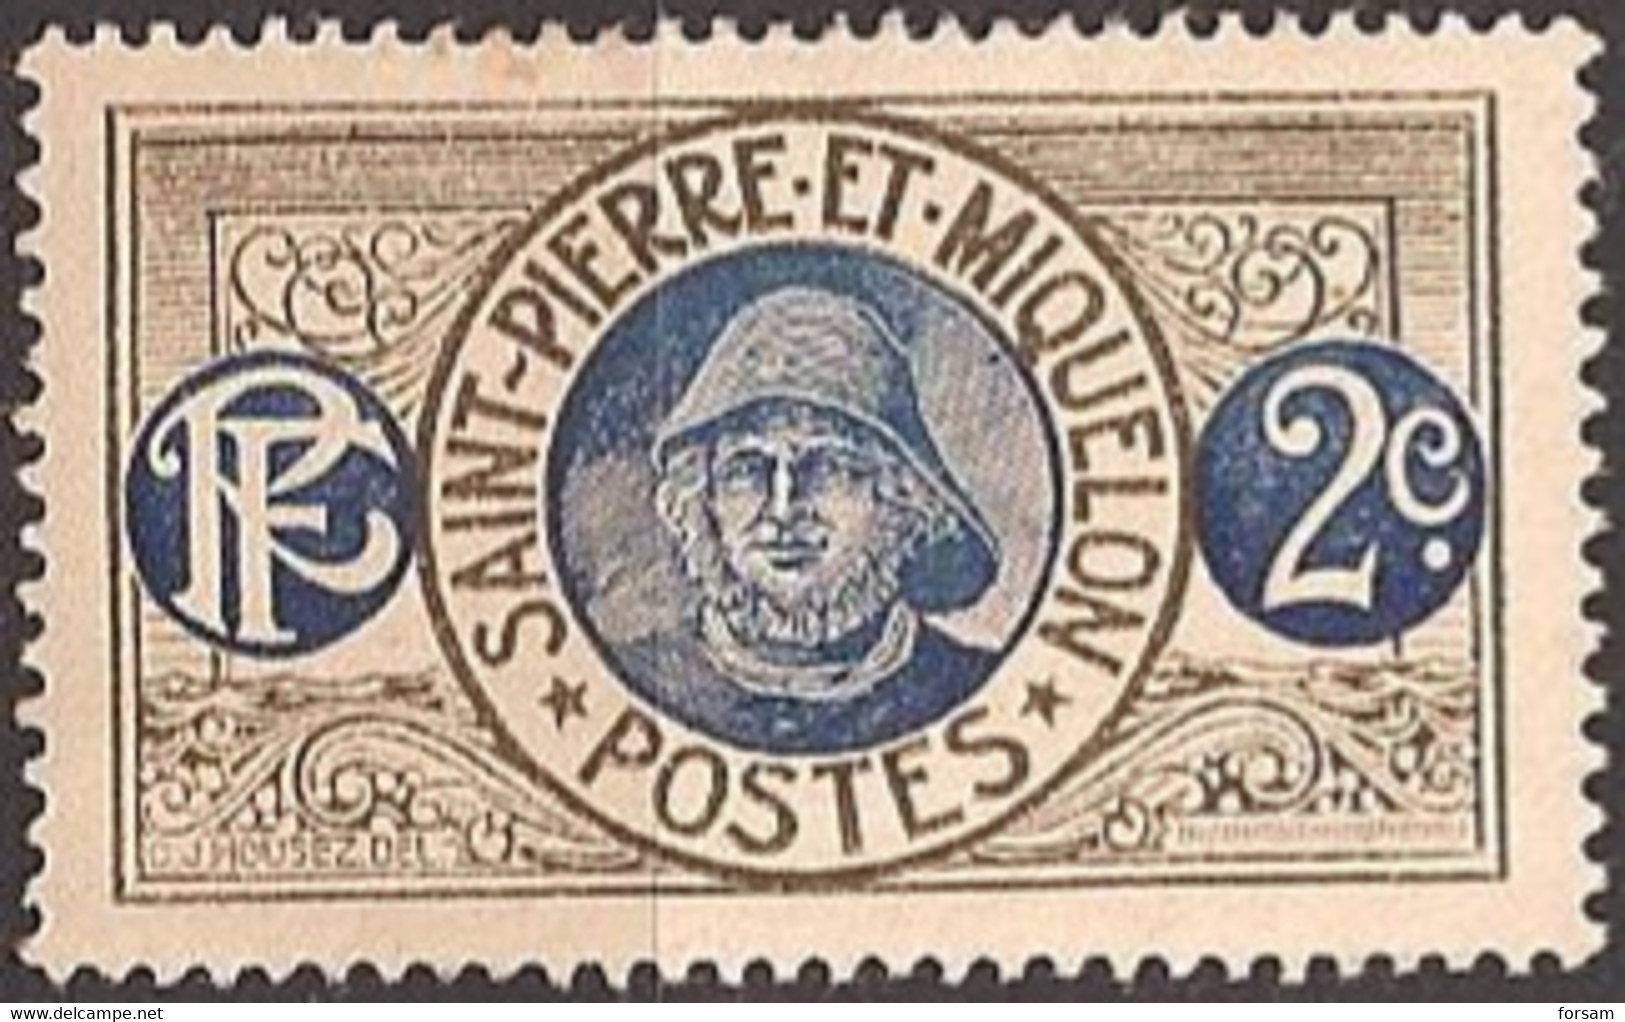 SAINT-PIERRE And MIQUELON..1909/17..Michel # 74...MH. - Unused Stamps